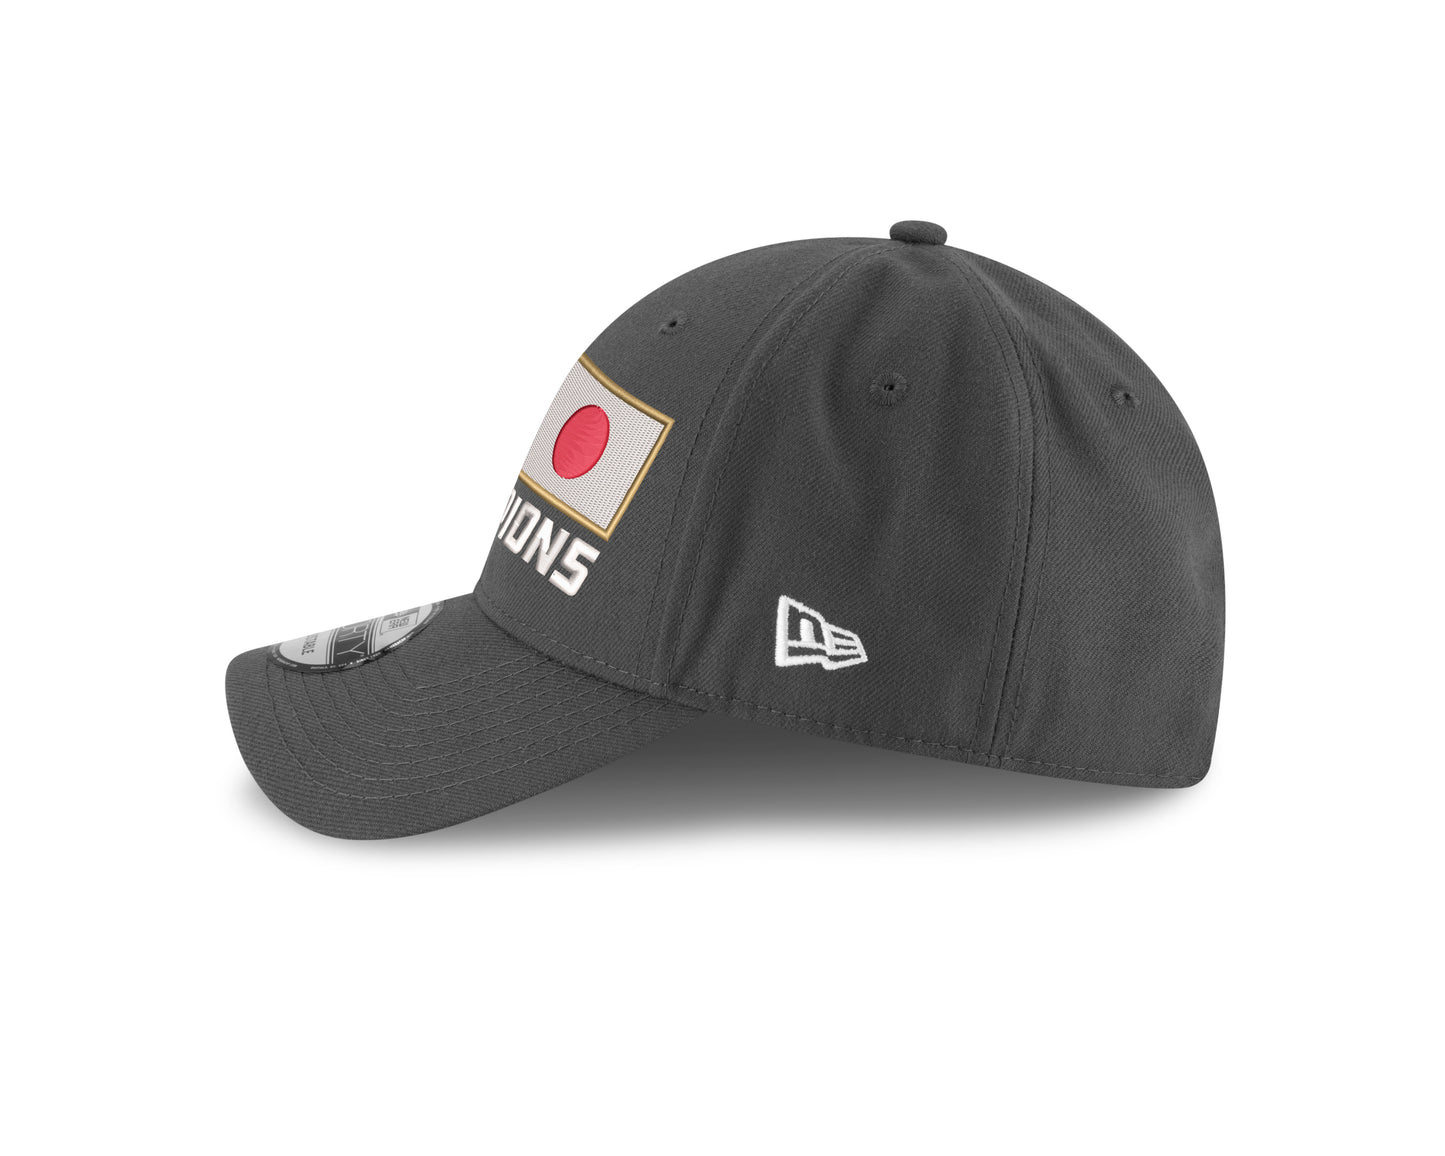 Japan 2023 World Baseball Classic Champions New Era Graphite 9FORTY Adjustable Hat